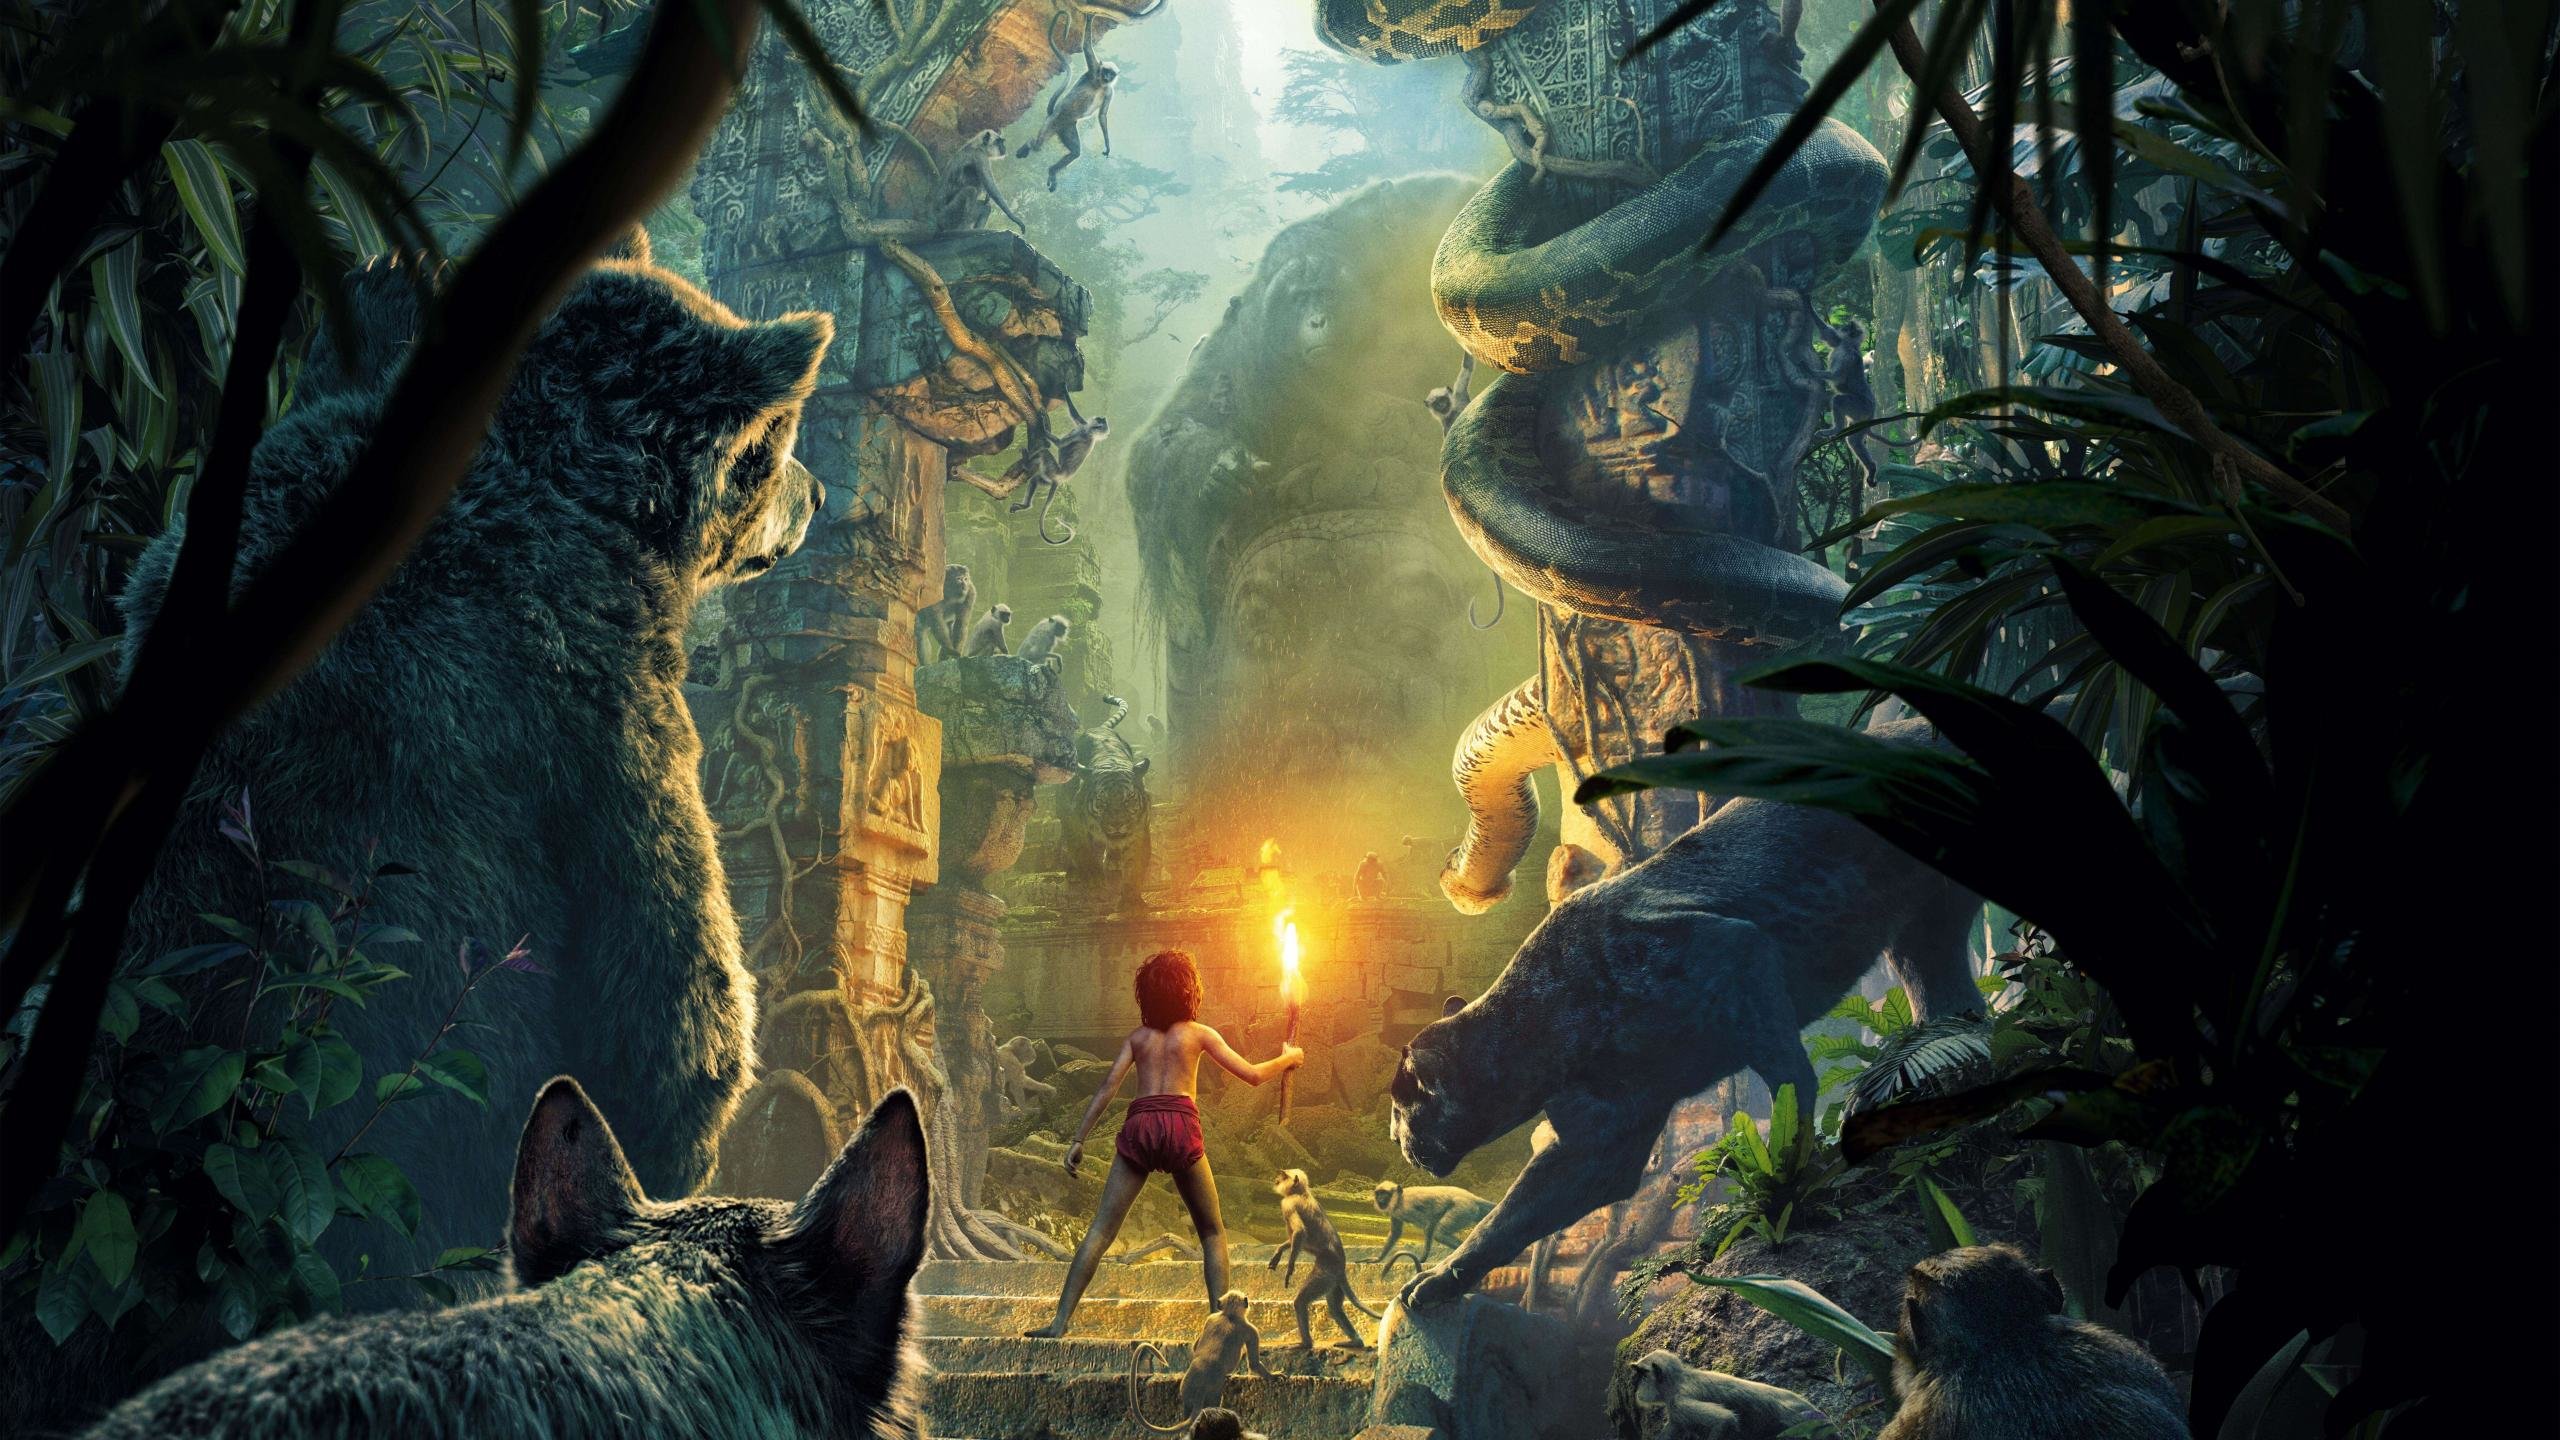 Best The Jungle Book Movie (2016) wallpaper ID:86452 for High Resolution hd 2560x1440 desktop